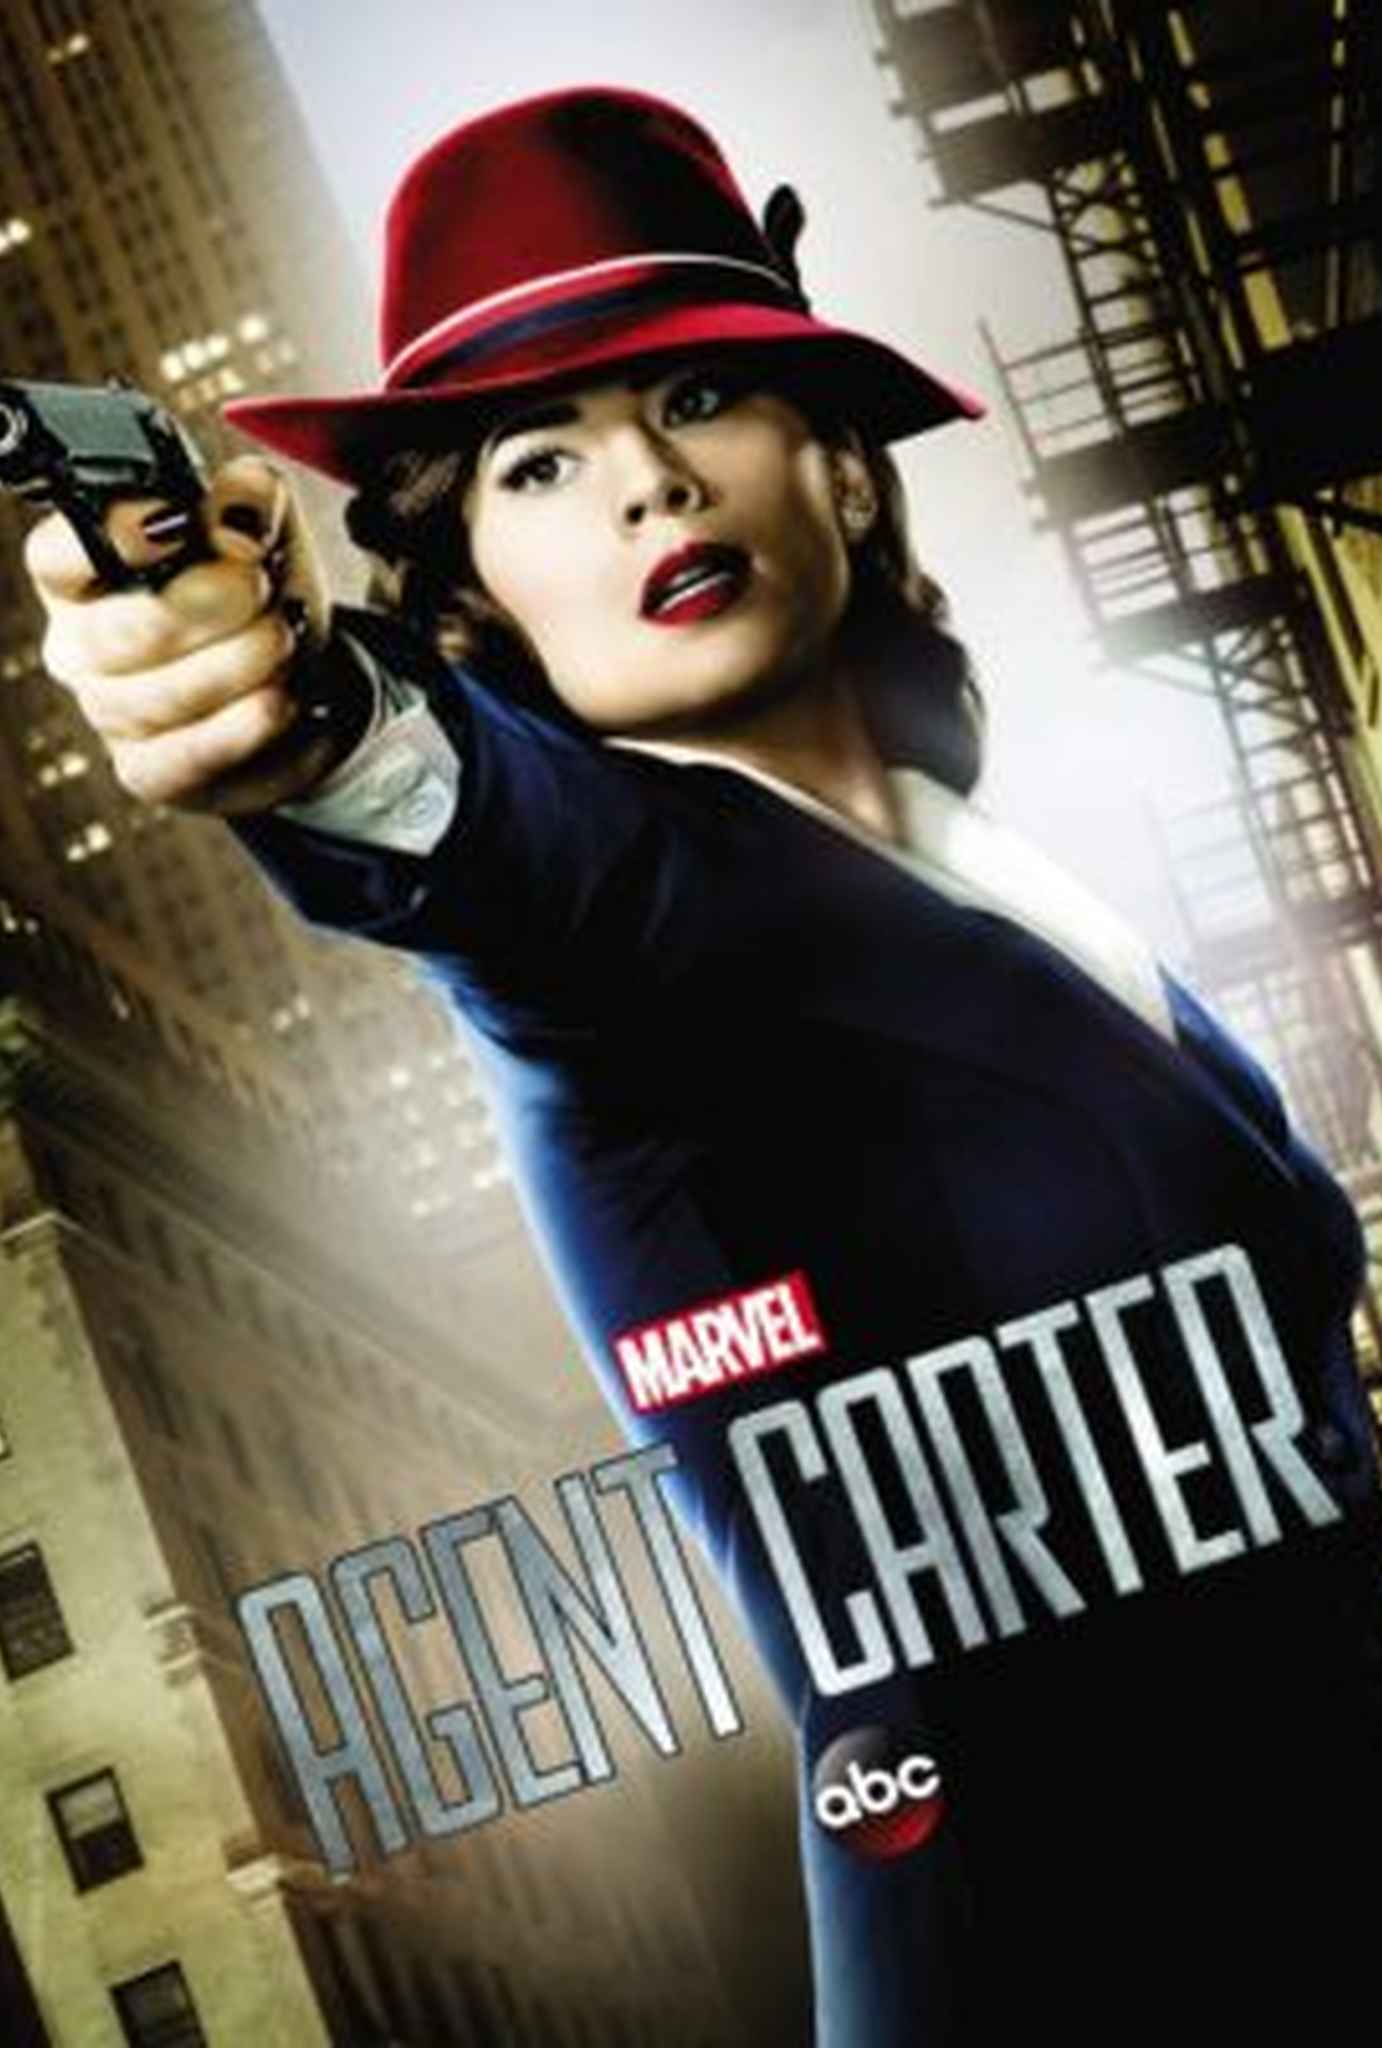 Agent Carter poster